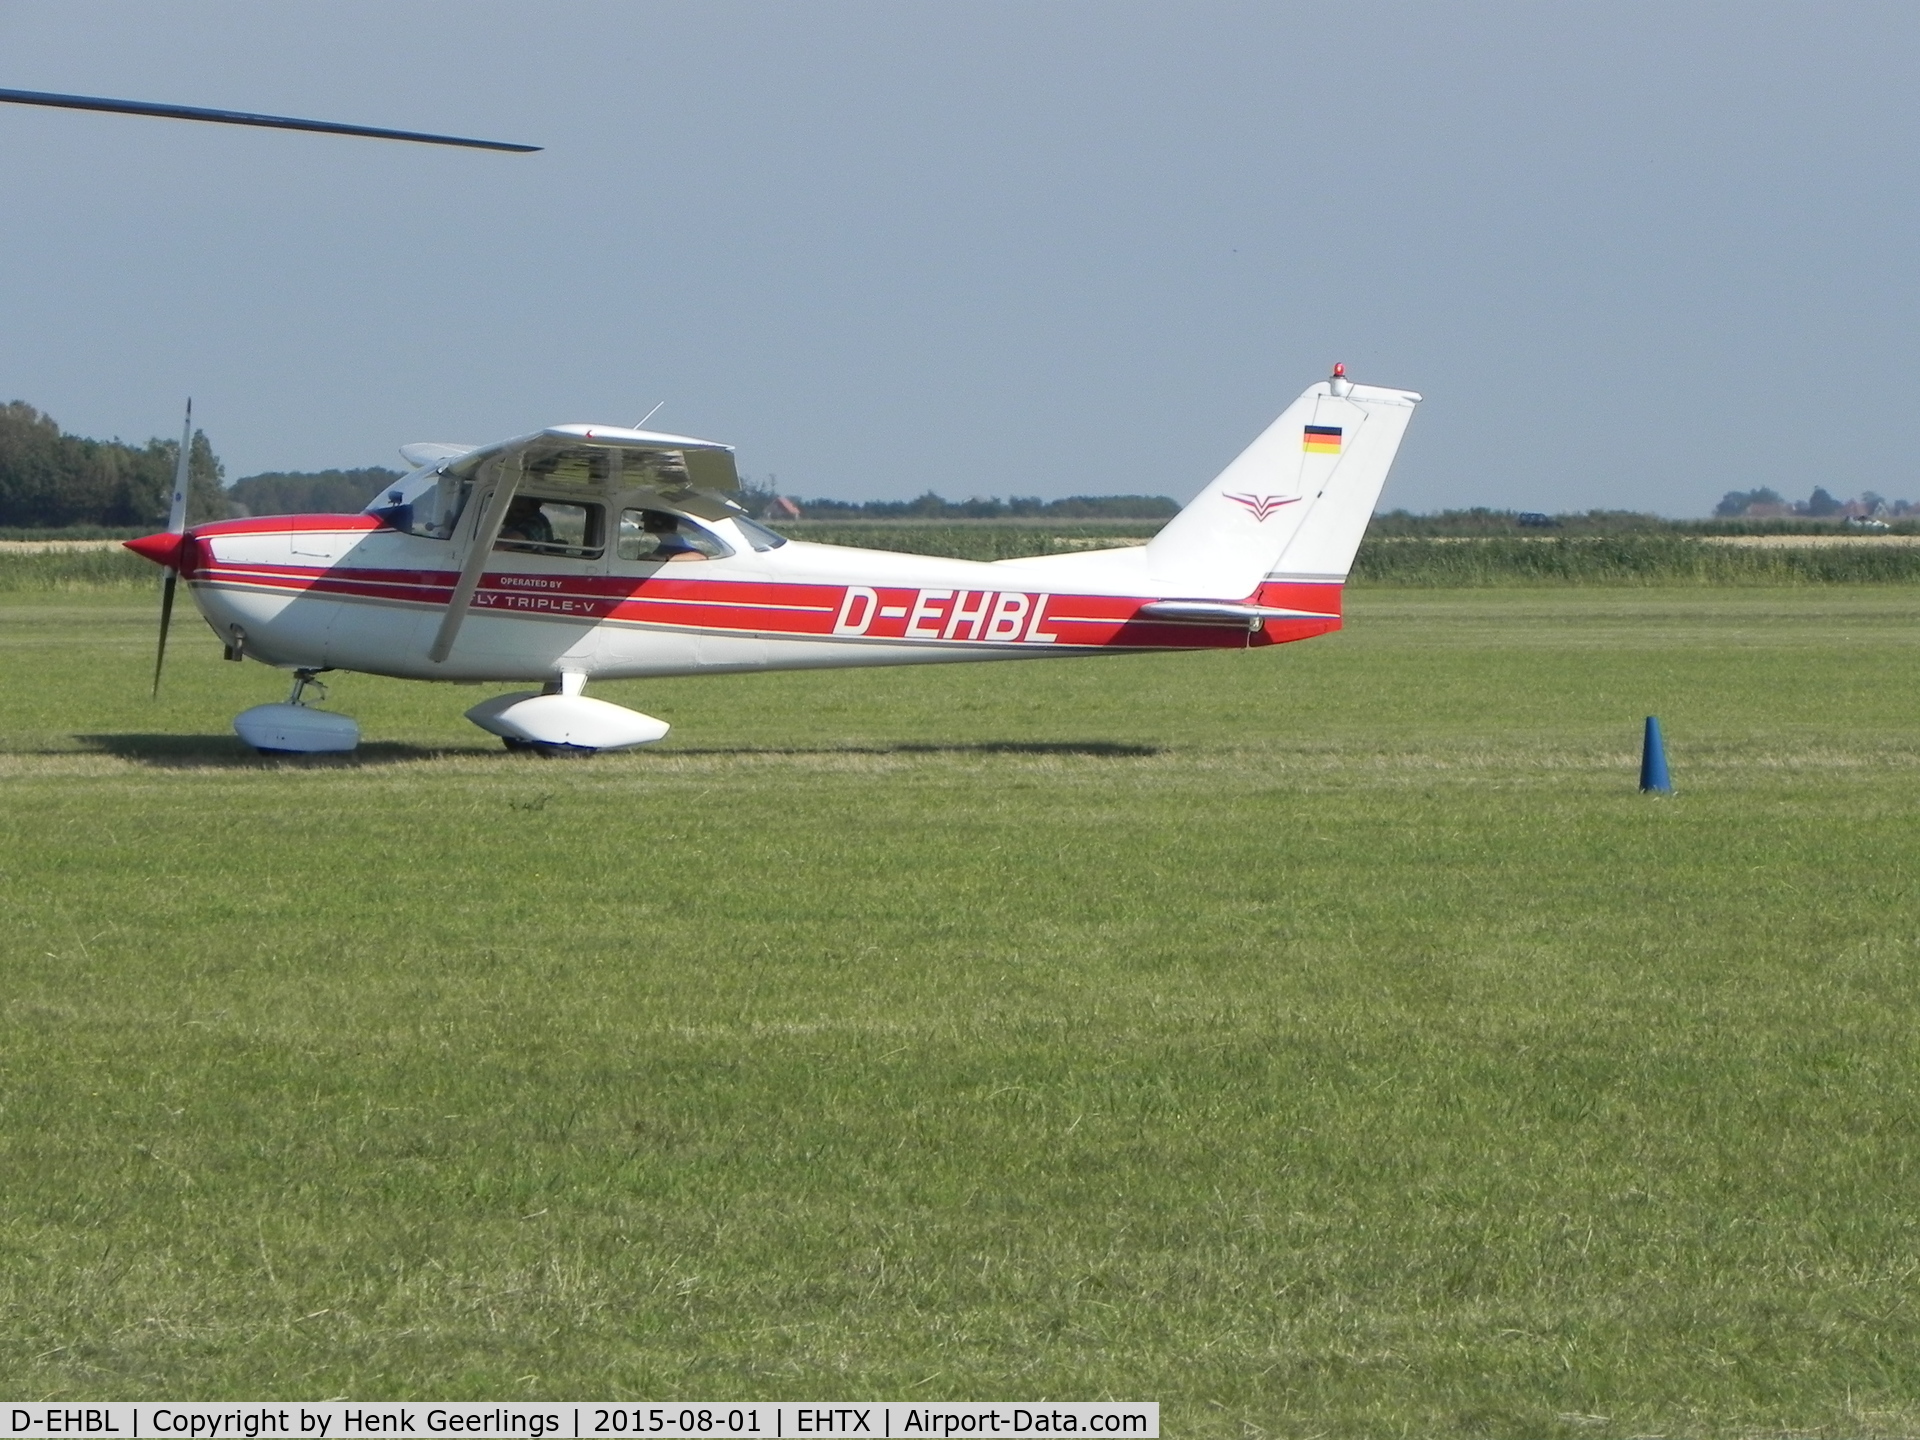 D-EHBL, 1965 Reims F172G Skyhawk C/N 0194, Texel Airshow , August 2015